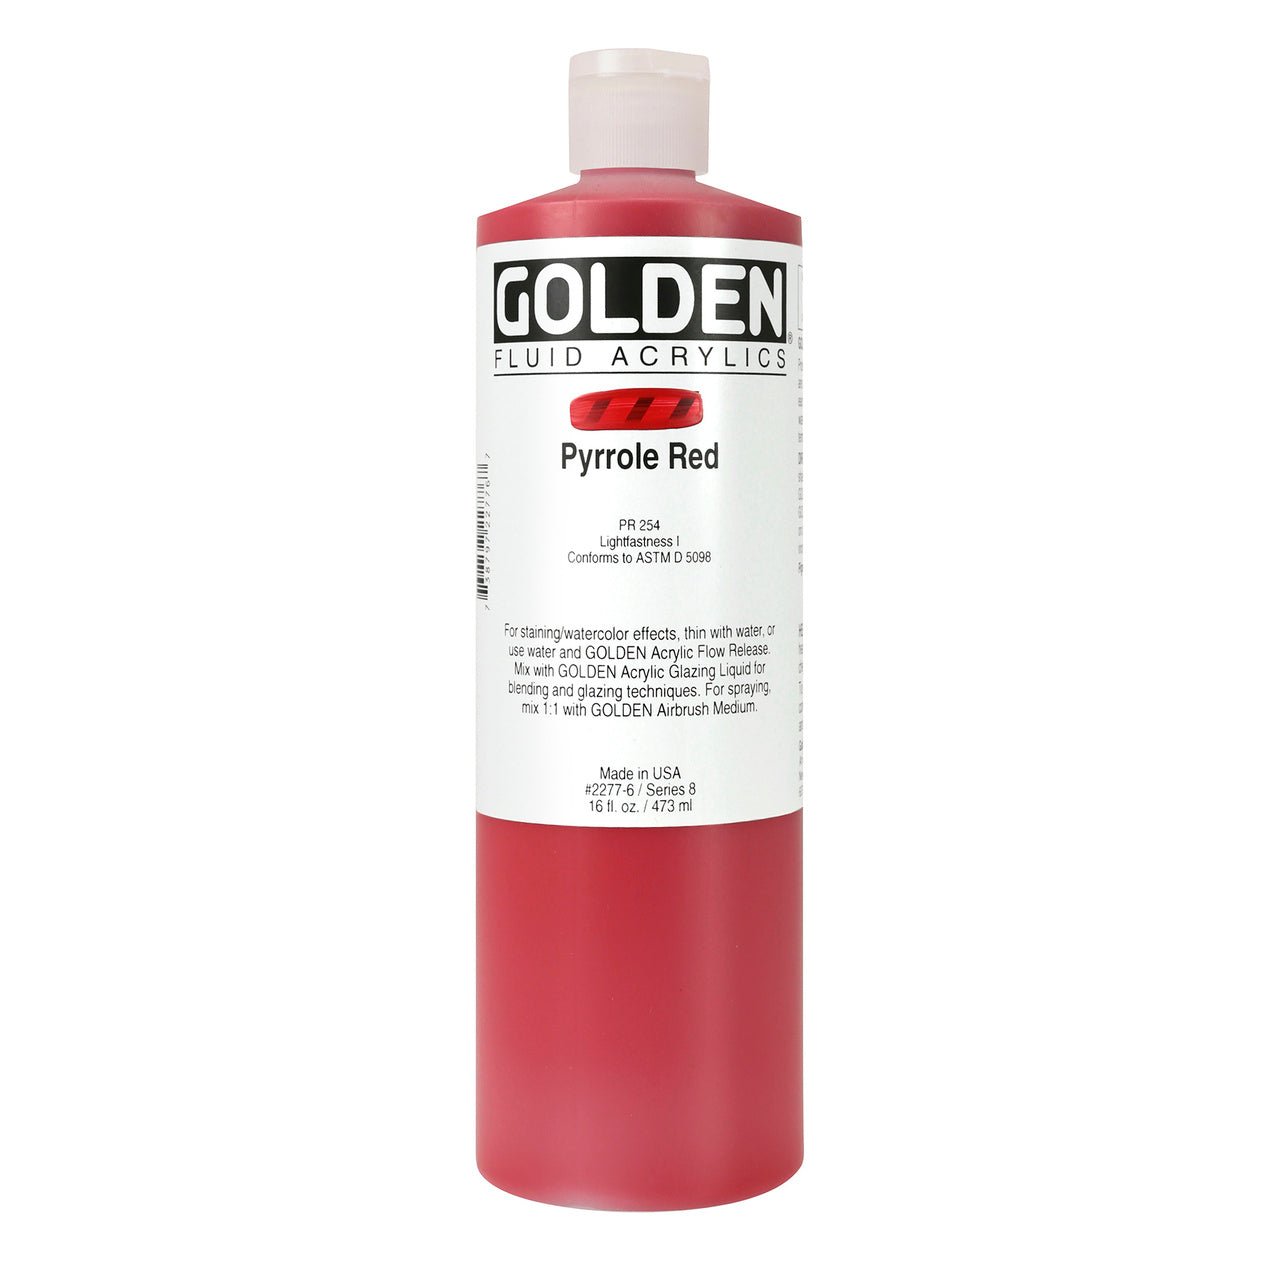 Golden Fluid Acrylic Pyrrole Red 16 oz - merriartist.com